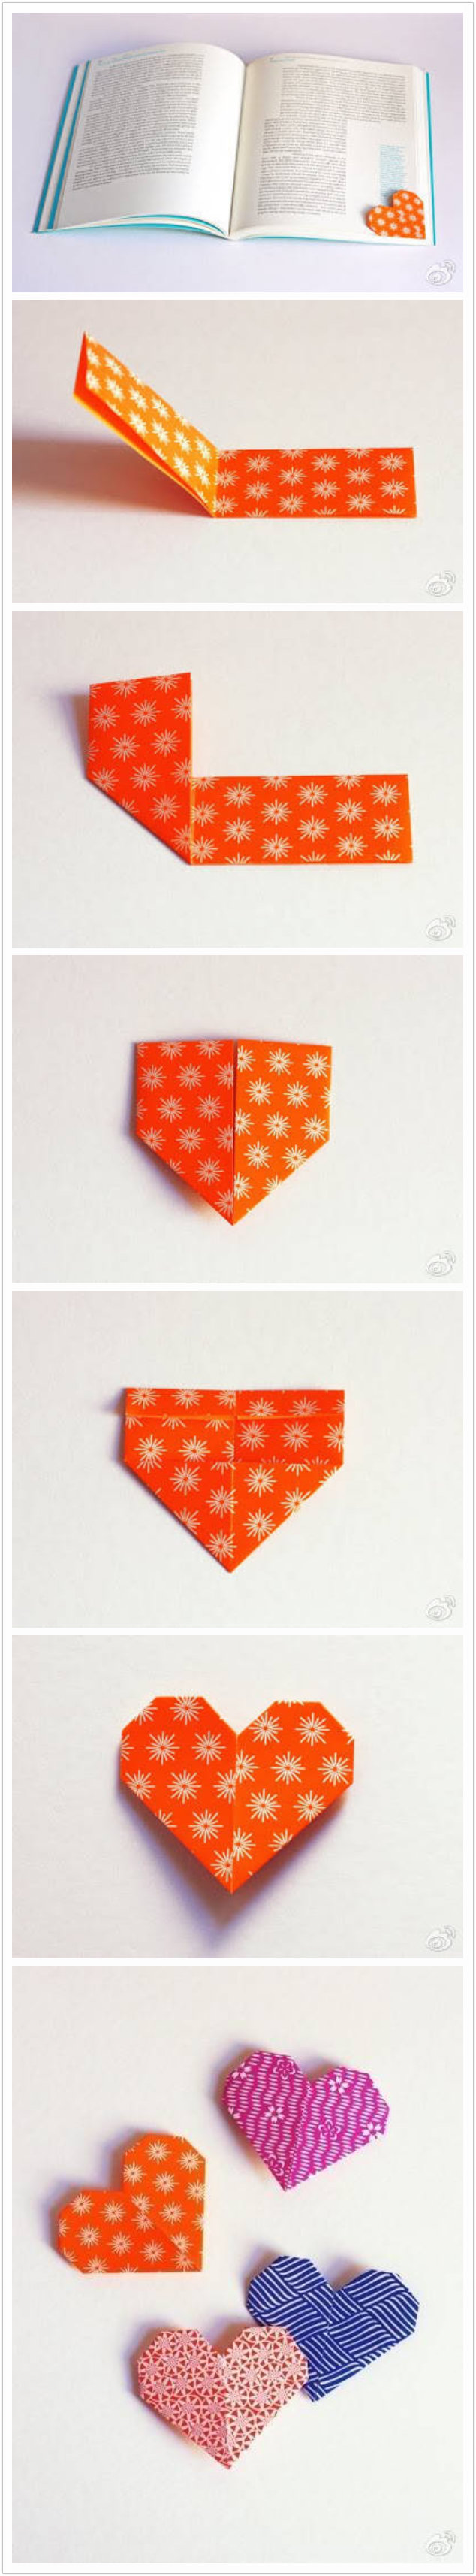 【diy心形折纸书签手工教程】一枚心形的折纸书签,用的纸张是和风的